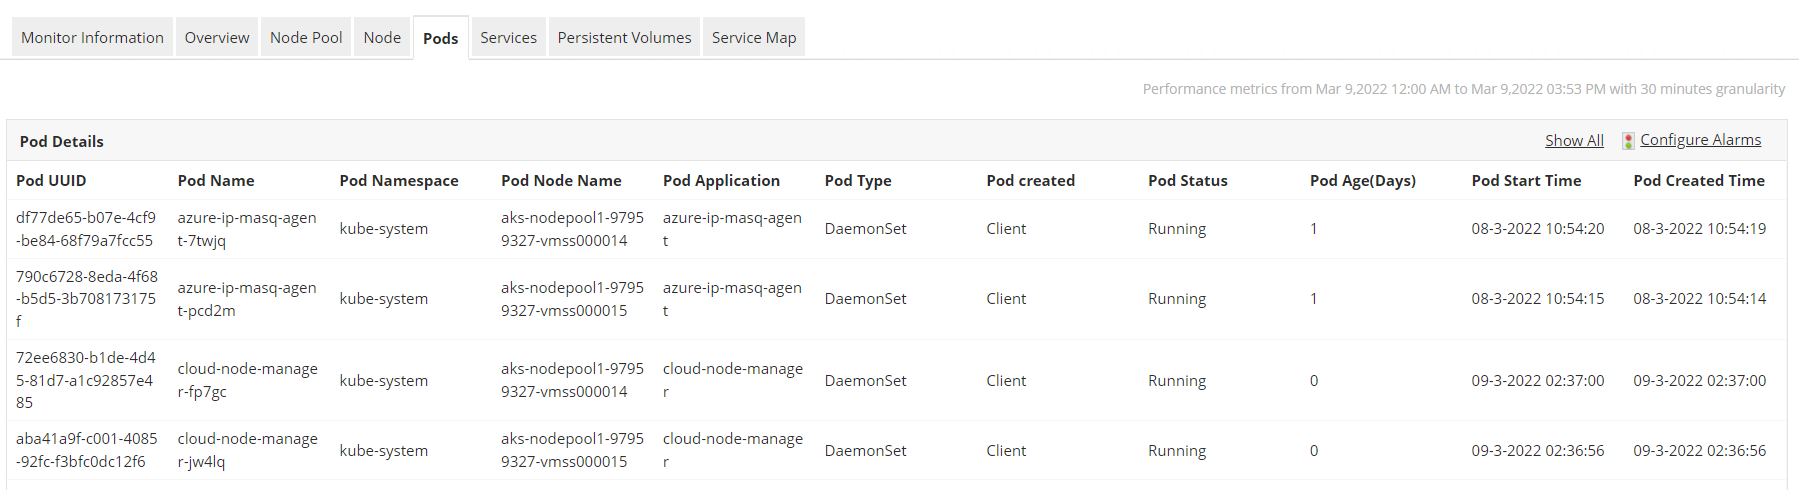 Dashboard de monitoreo de pods Azure Kubernets (AKS) - Applications Manager